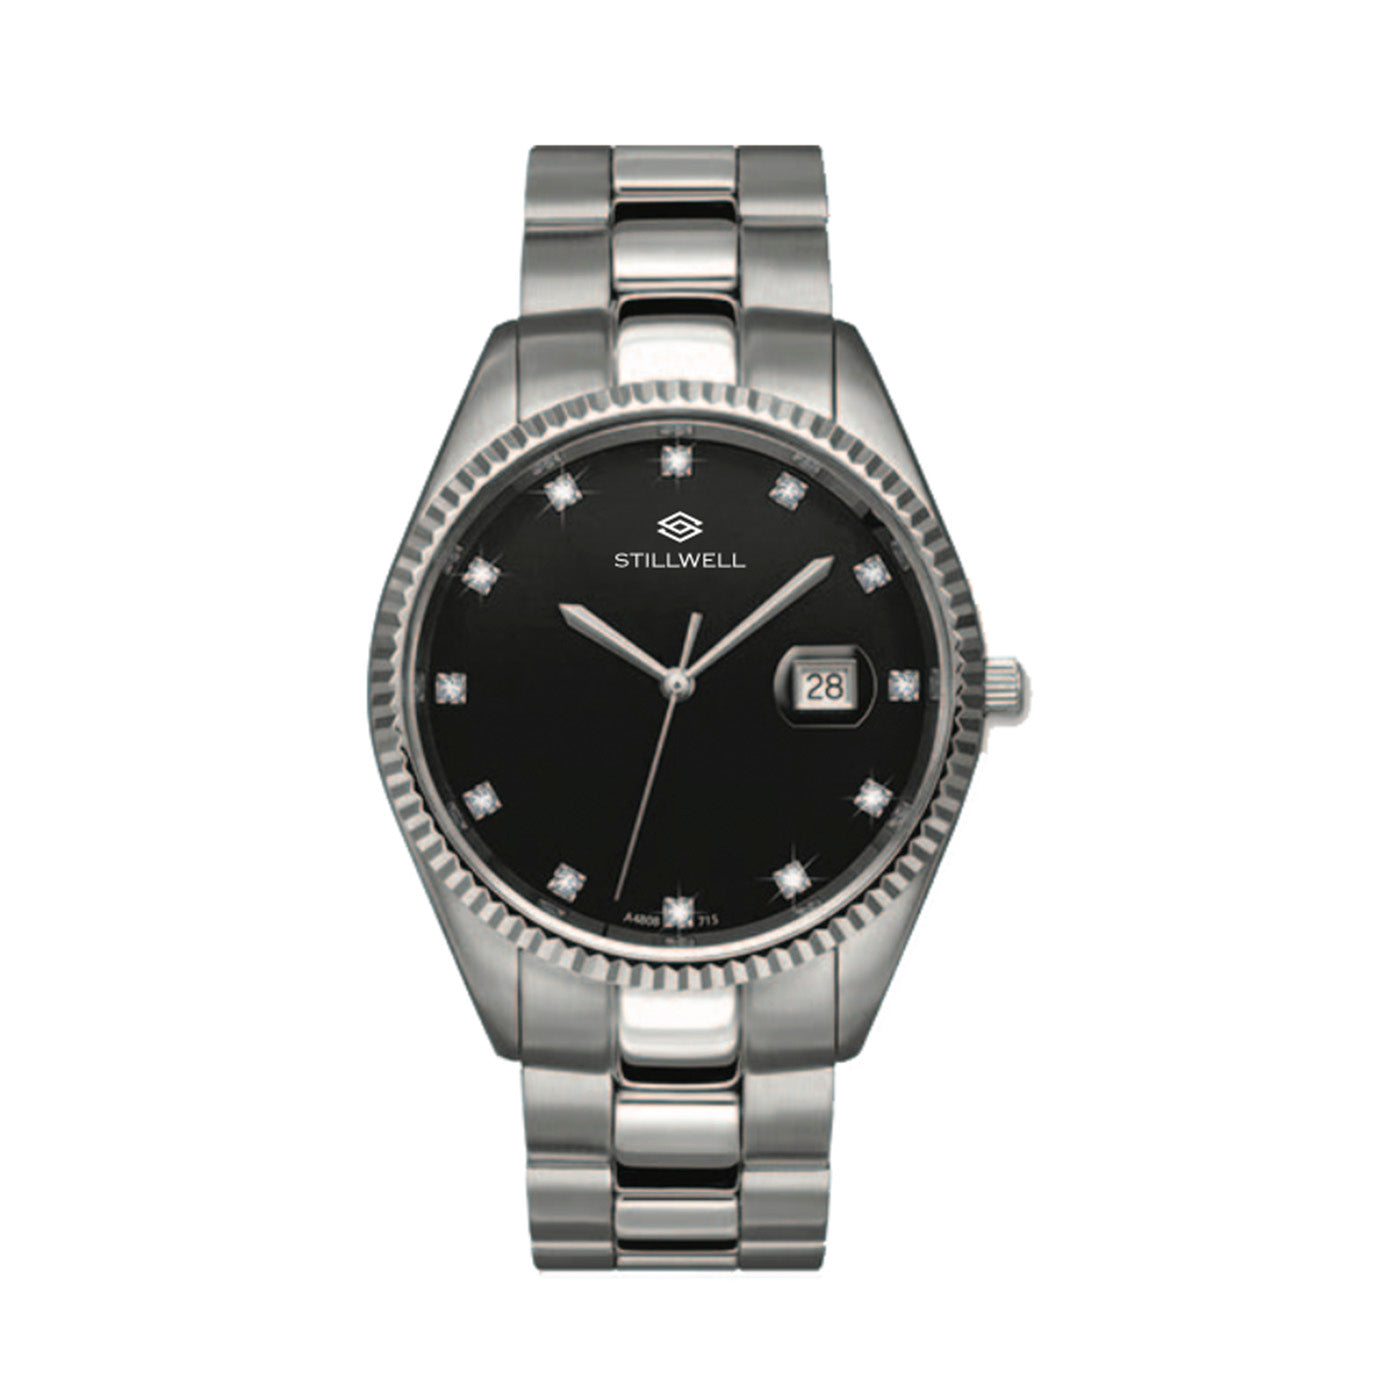 Stillwell Silver and Diamond Watch